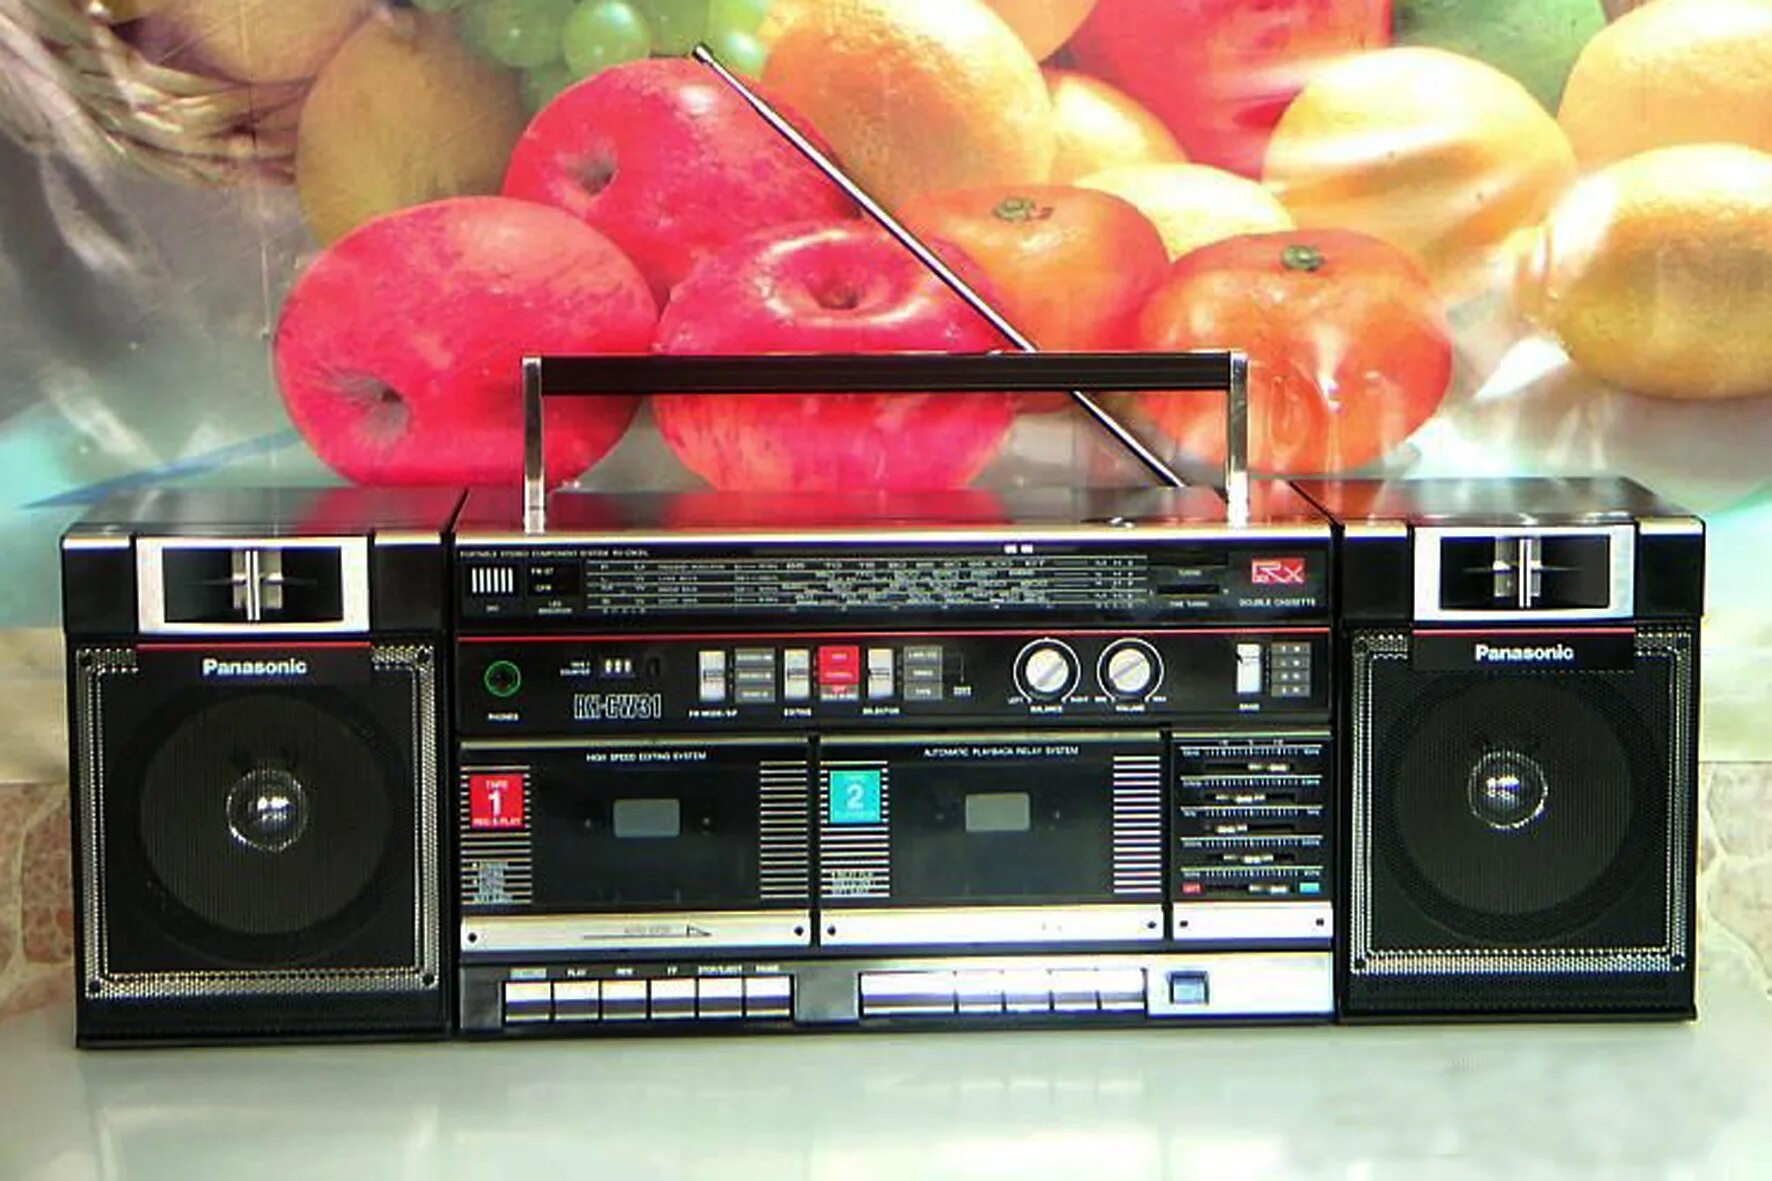 Panasonic RX-cw31. Магнитофон Националь Панасоник 80х. Двухкассетный магнитофон Националь Панасоник. Магнитофон Панасоник двухкассетный 90-х.